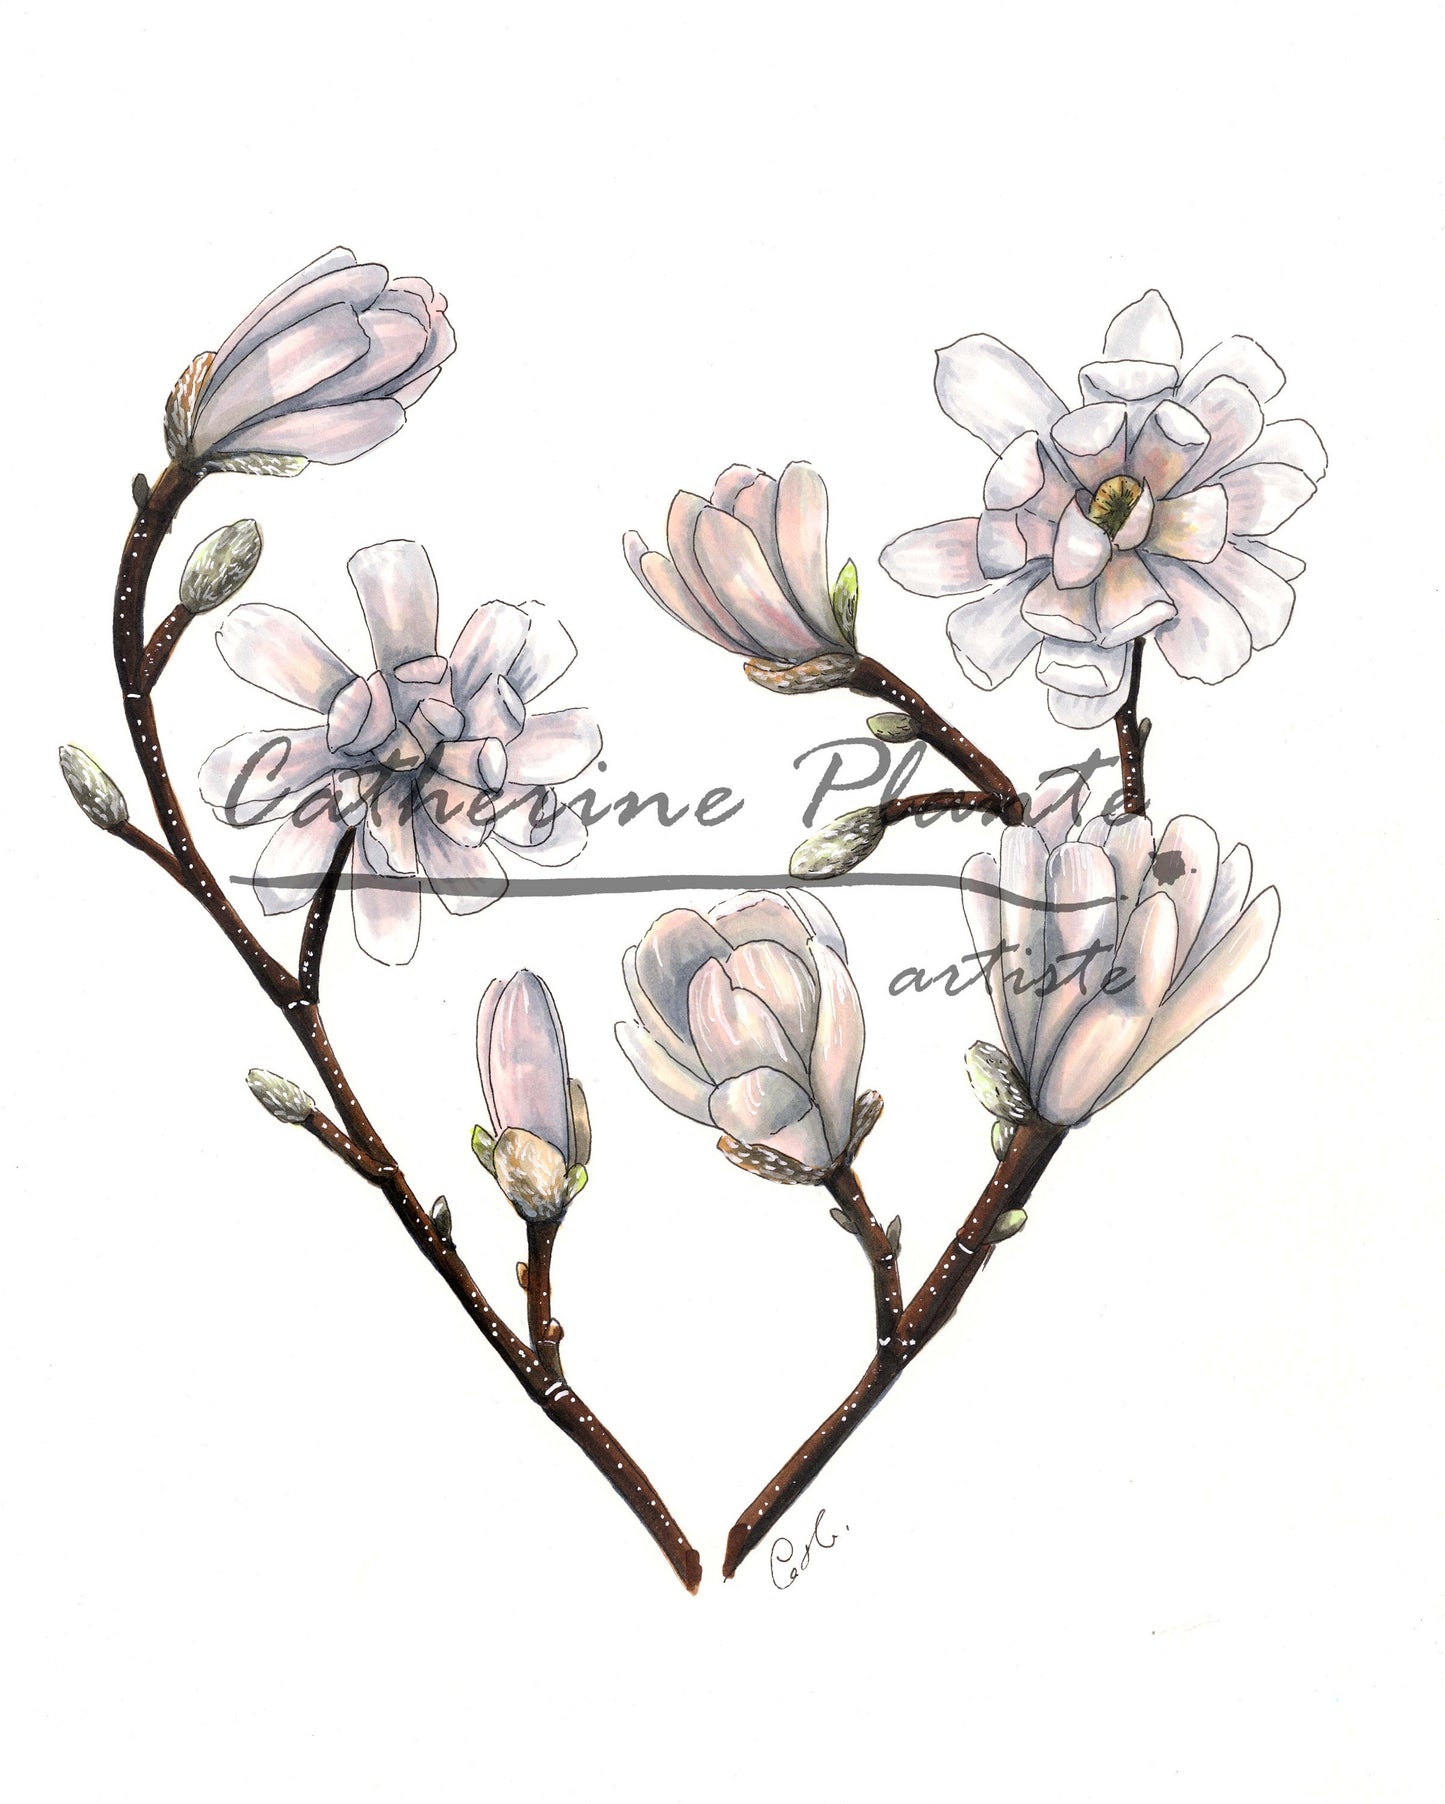 Impression d'art - Coeur de magnolias